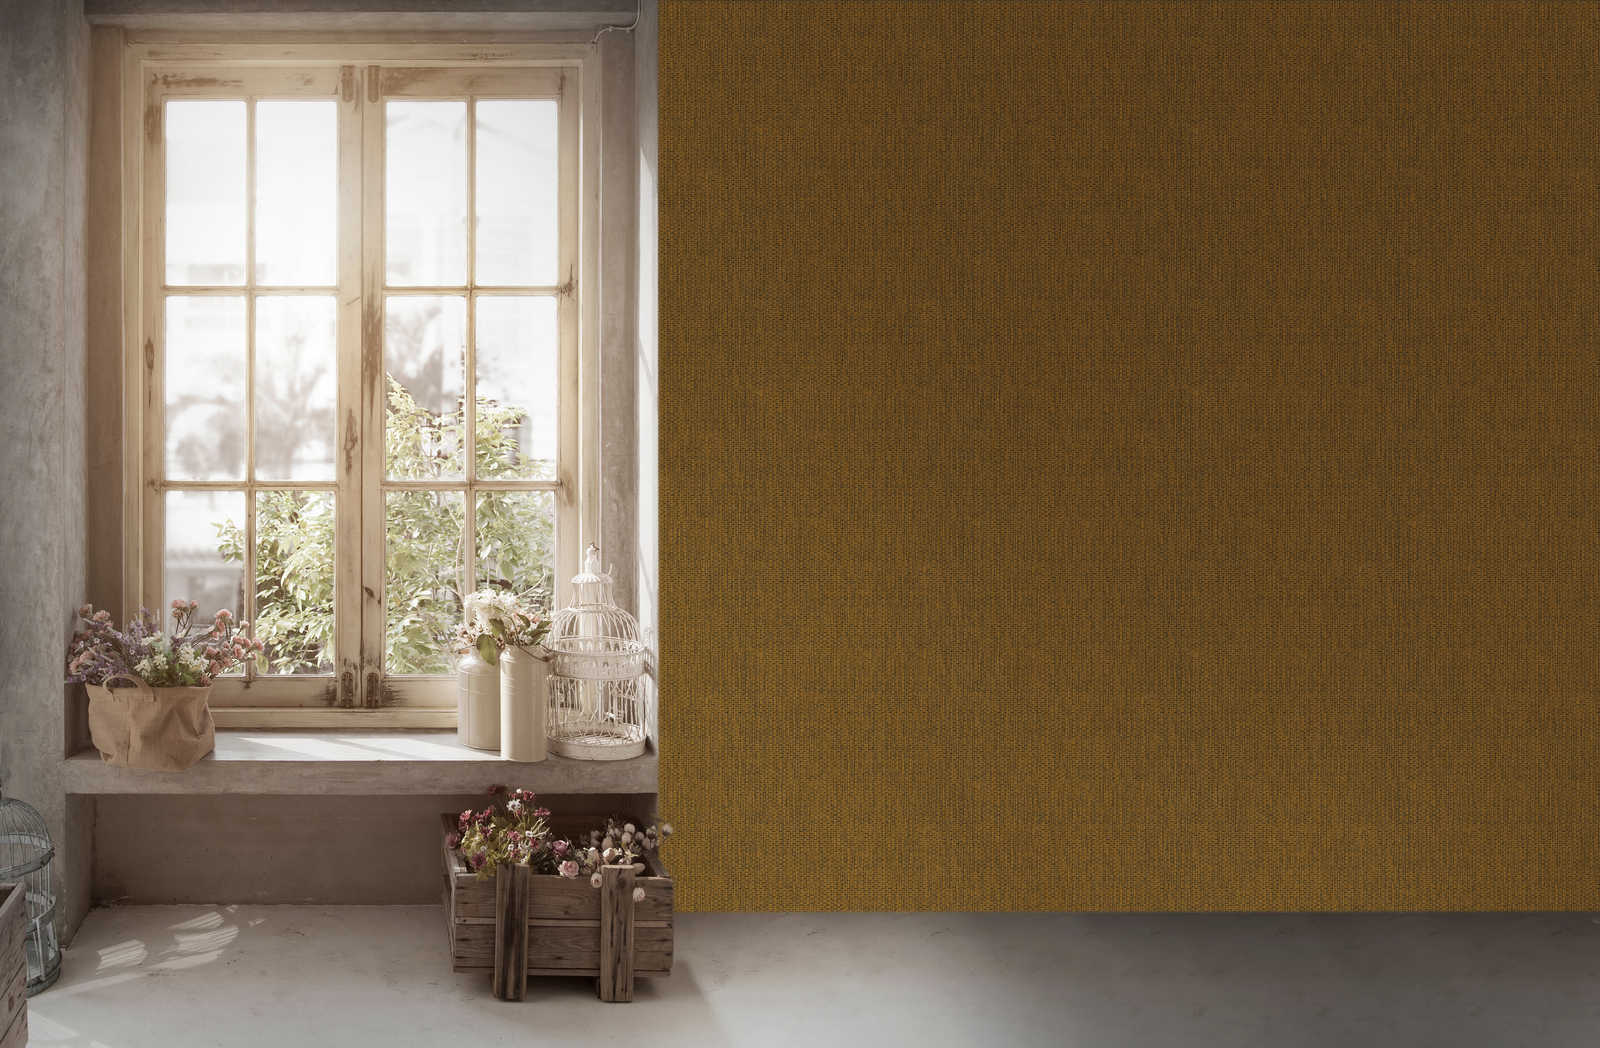             Wallpaper with raffia mats design - brown, yellow
        